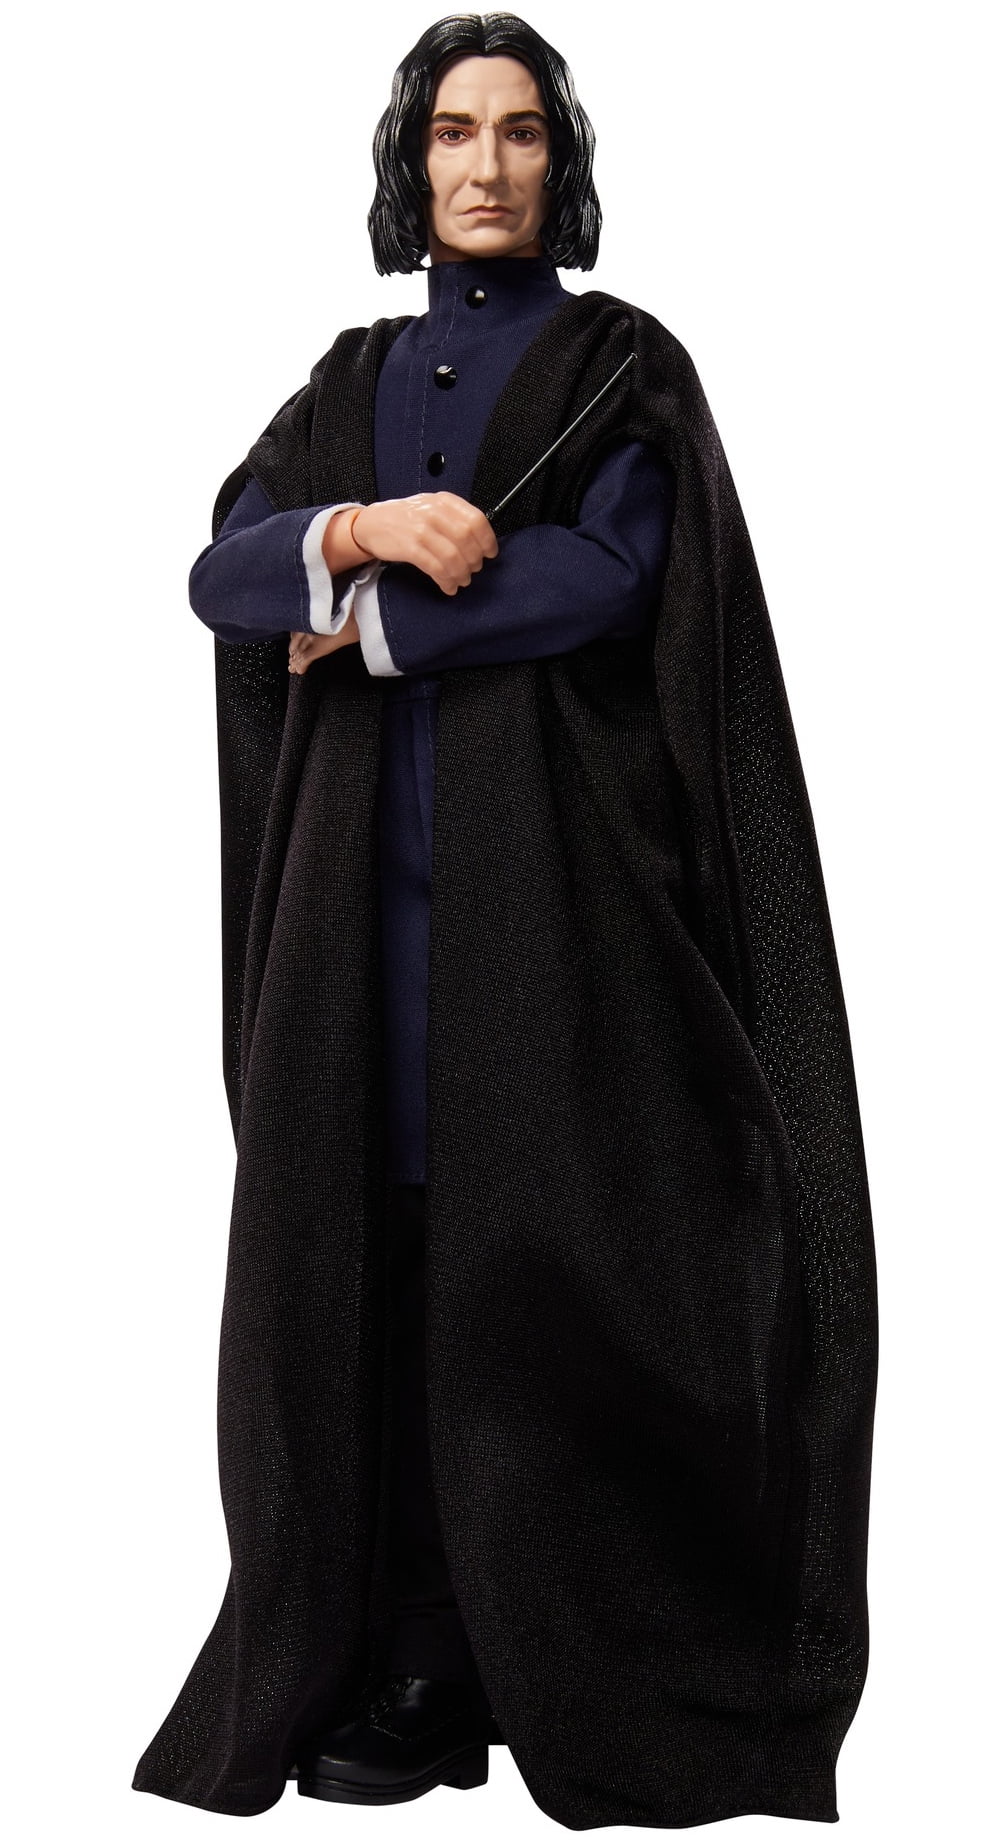 Harry Potter Professor Snape Doll 